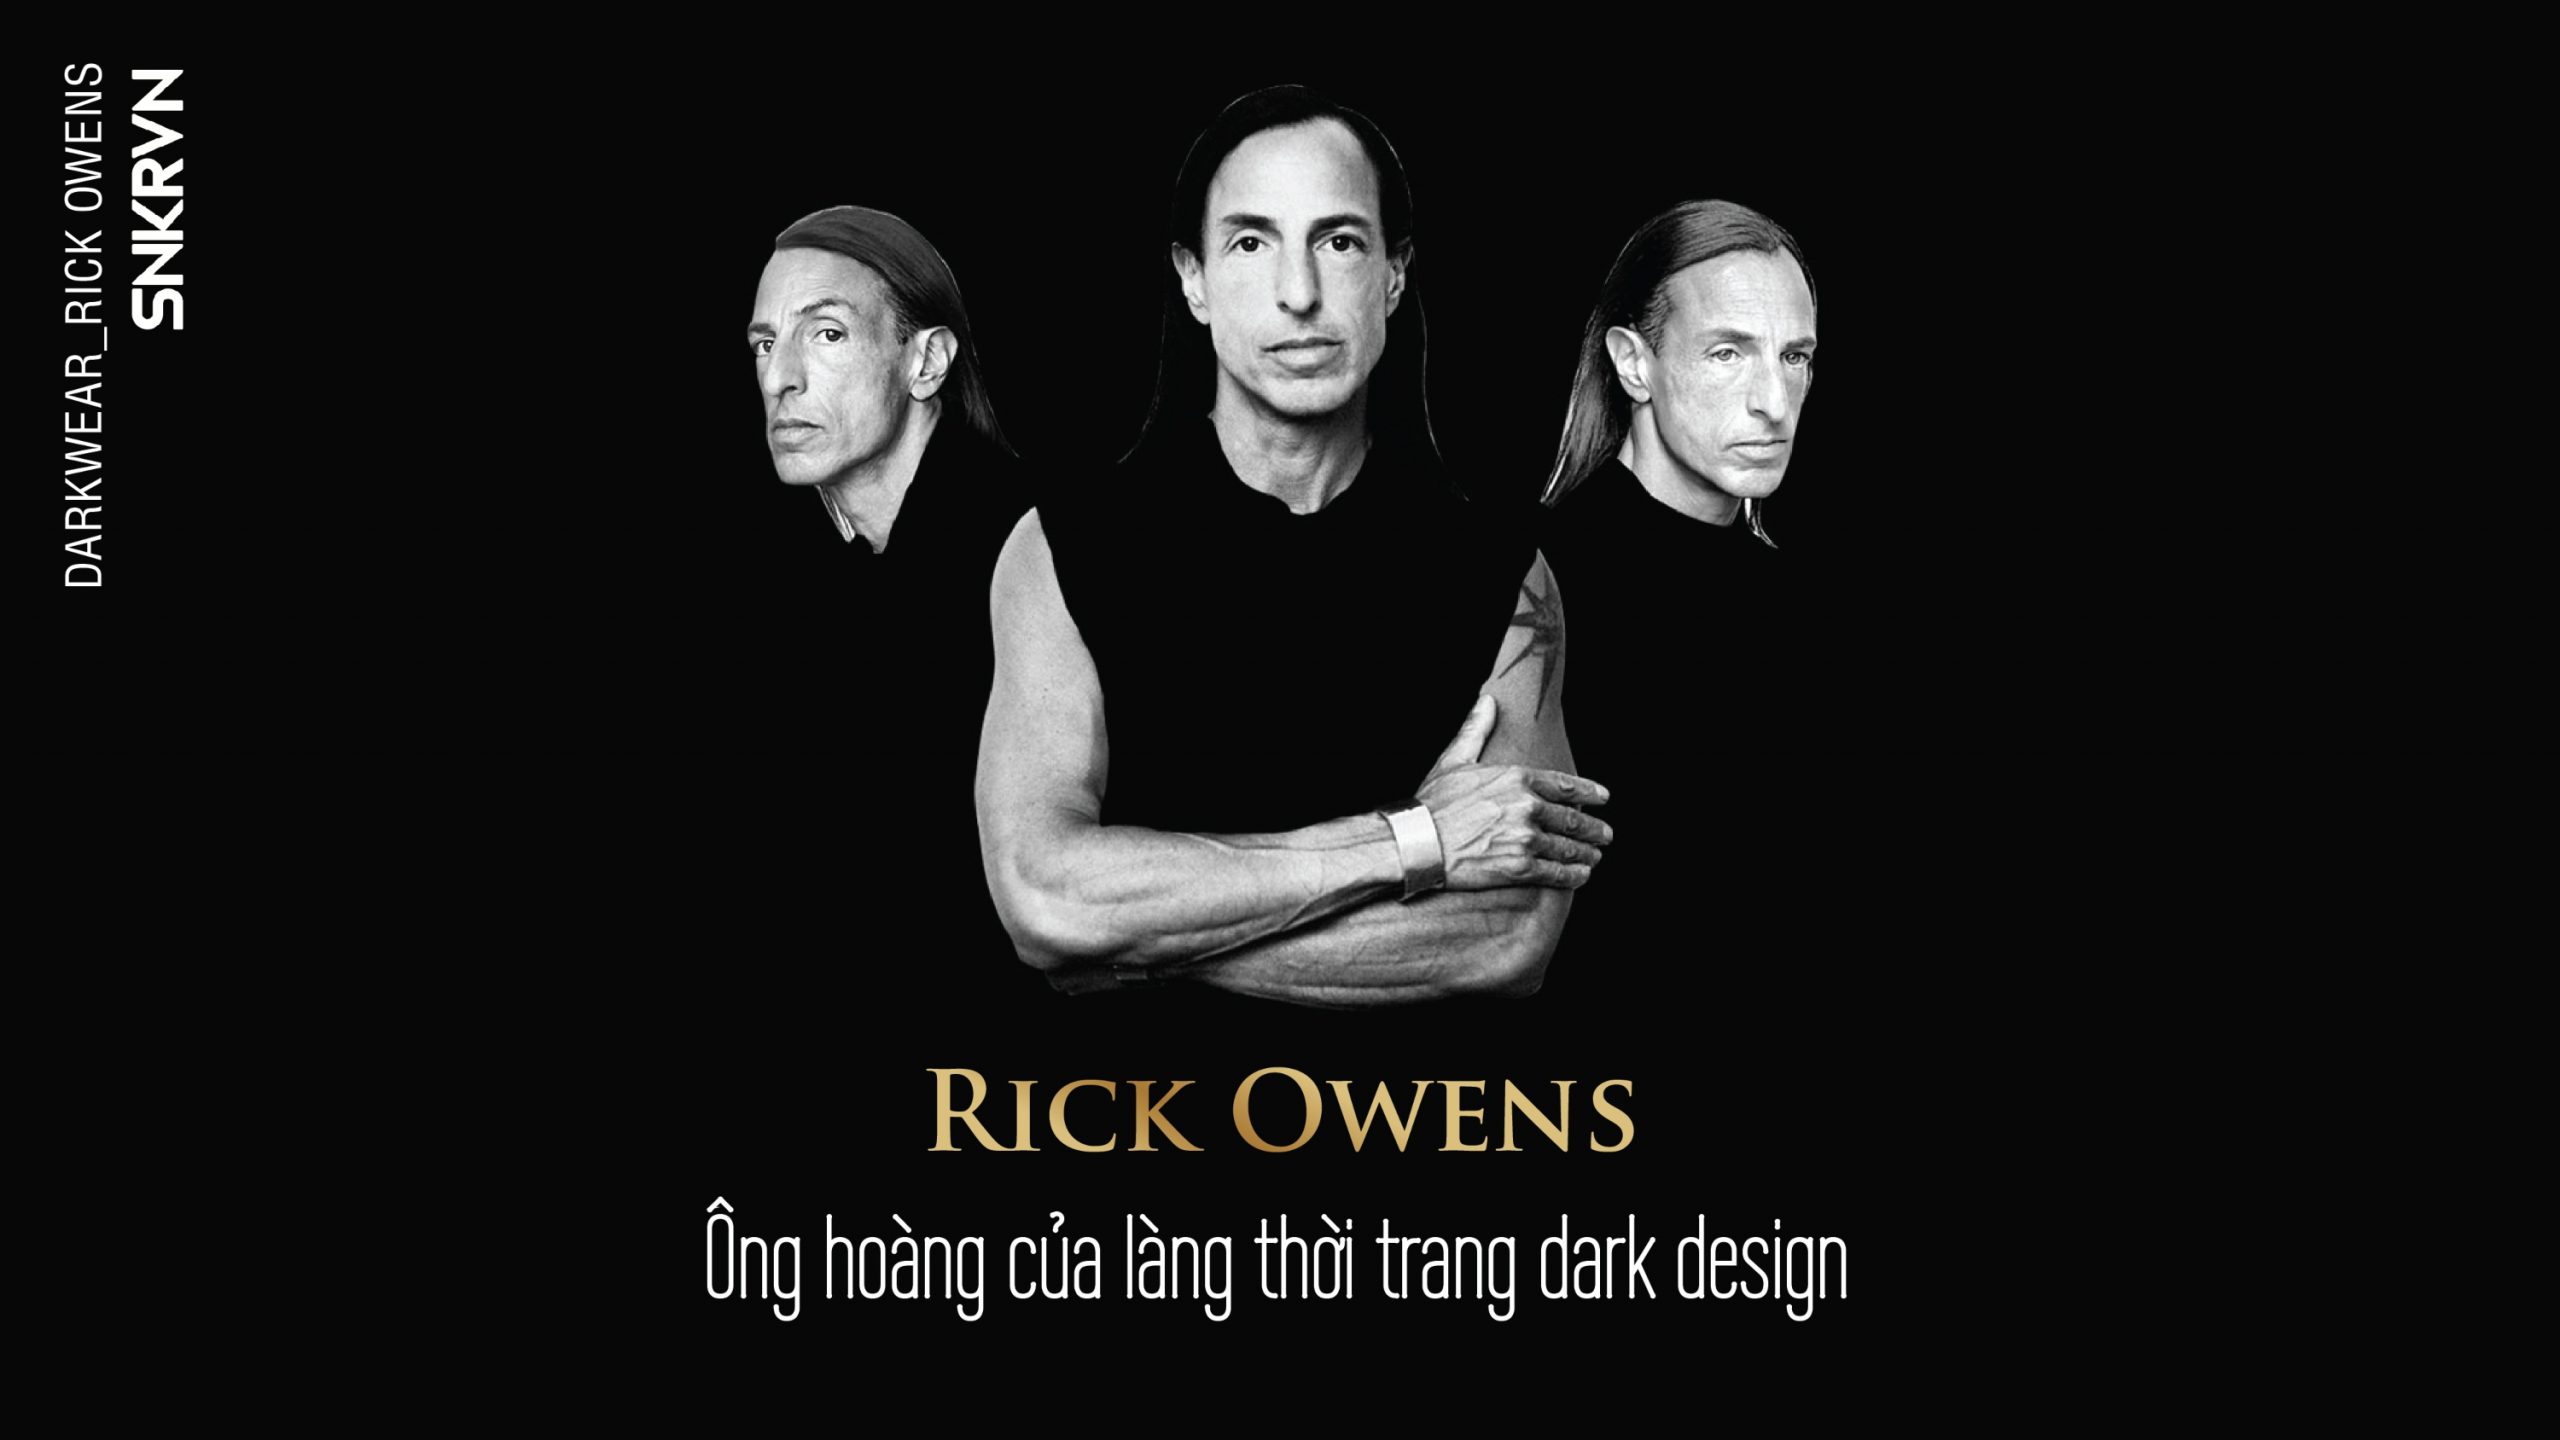 Rick Owens - The king of darkwear